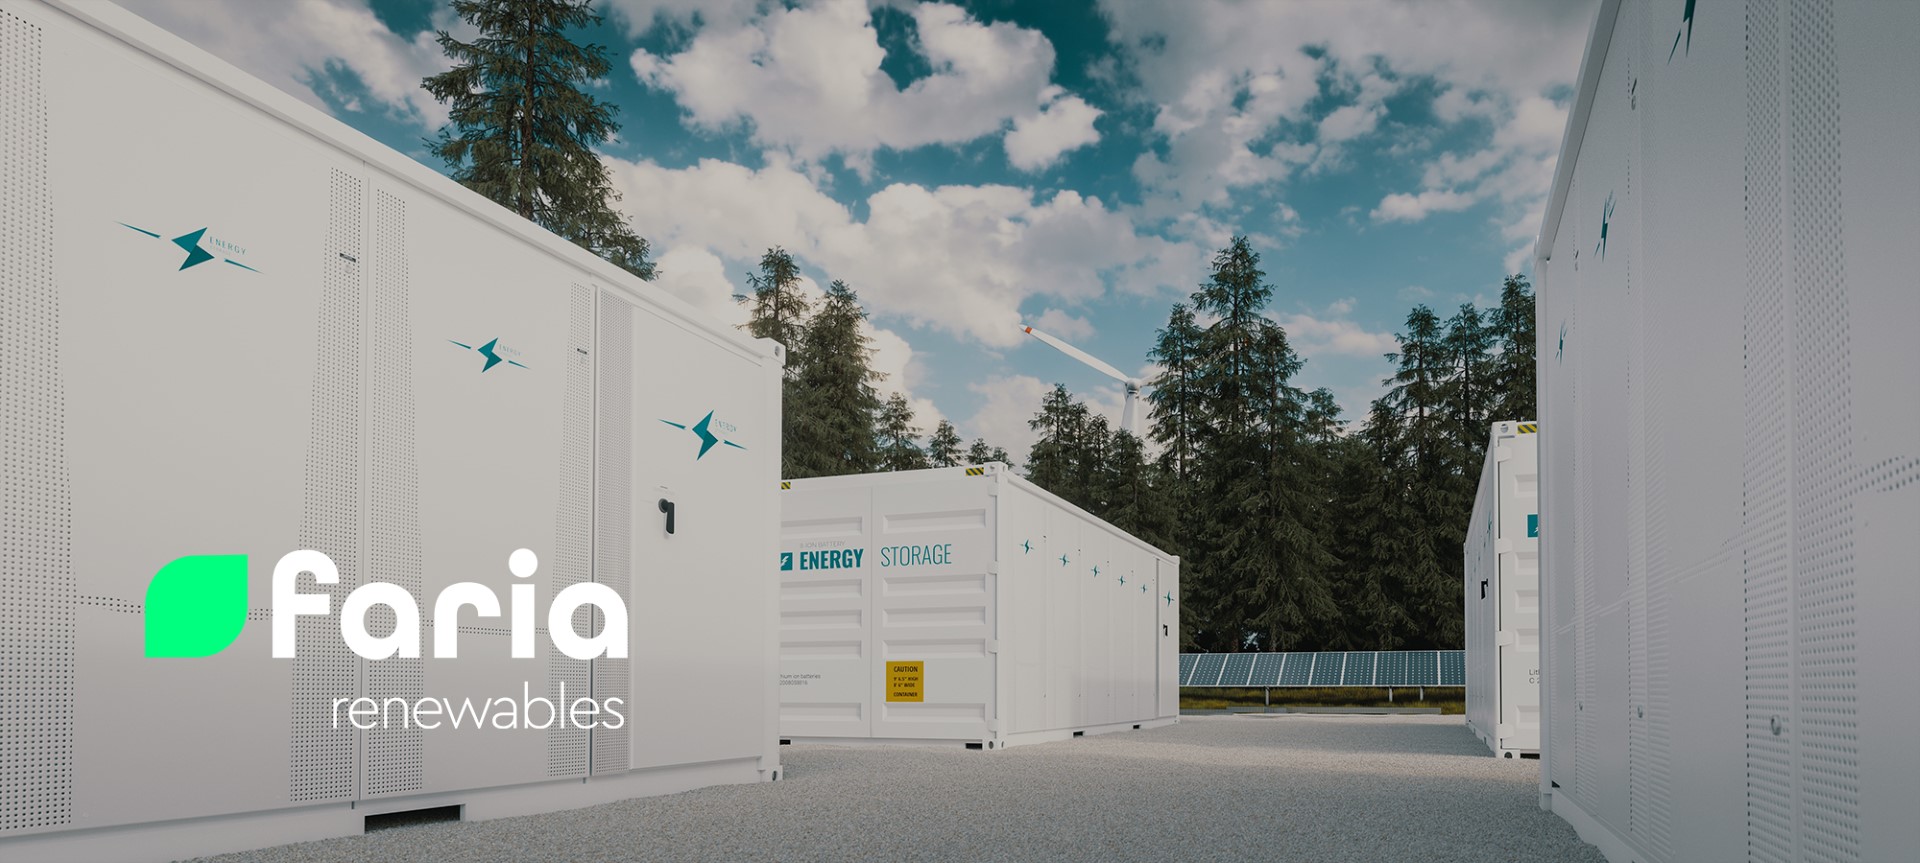 FARIA Renewables: Πέρασε στον 2ο διαγωνισμό για standalone μπαταρίες